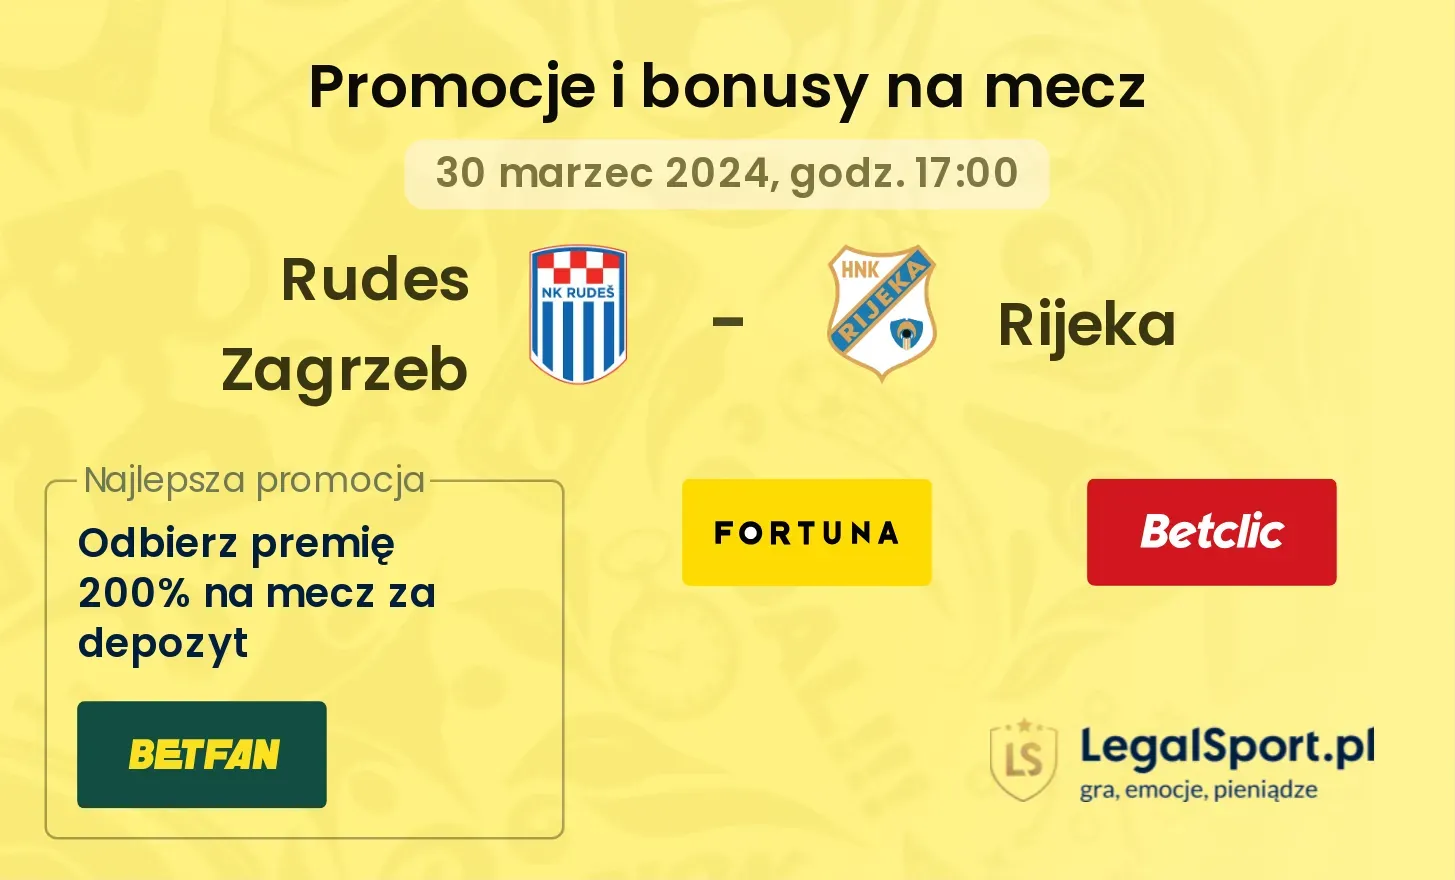 Rudes Zagrzeb - Rijeka promocje bonusy na mecz